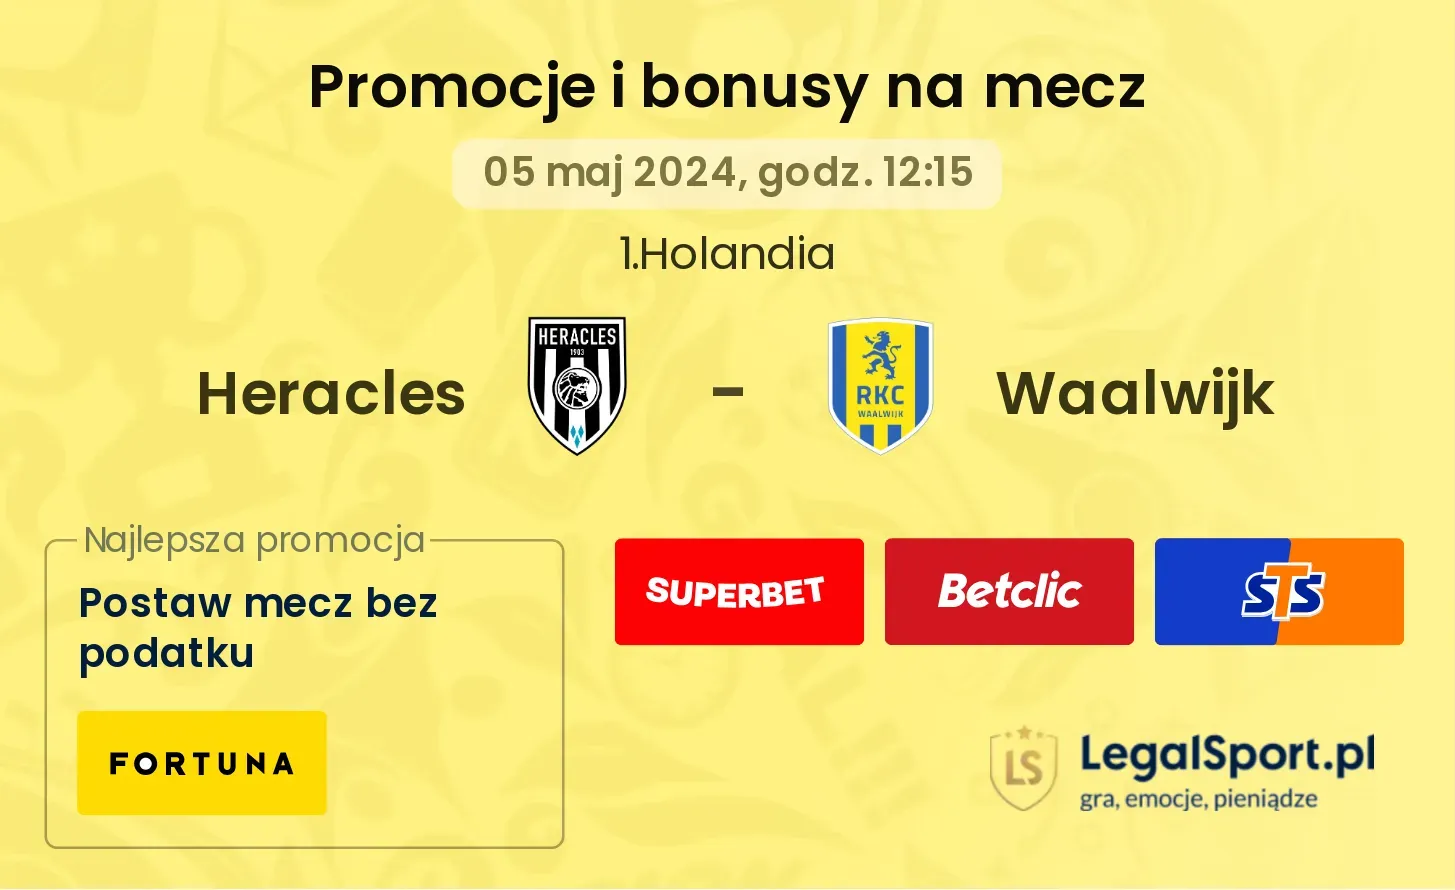 Heracles - Waalwijk promocje bonusy na mecz